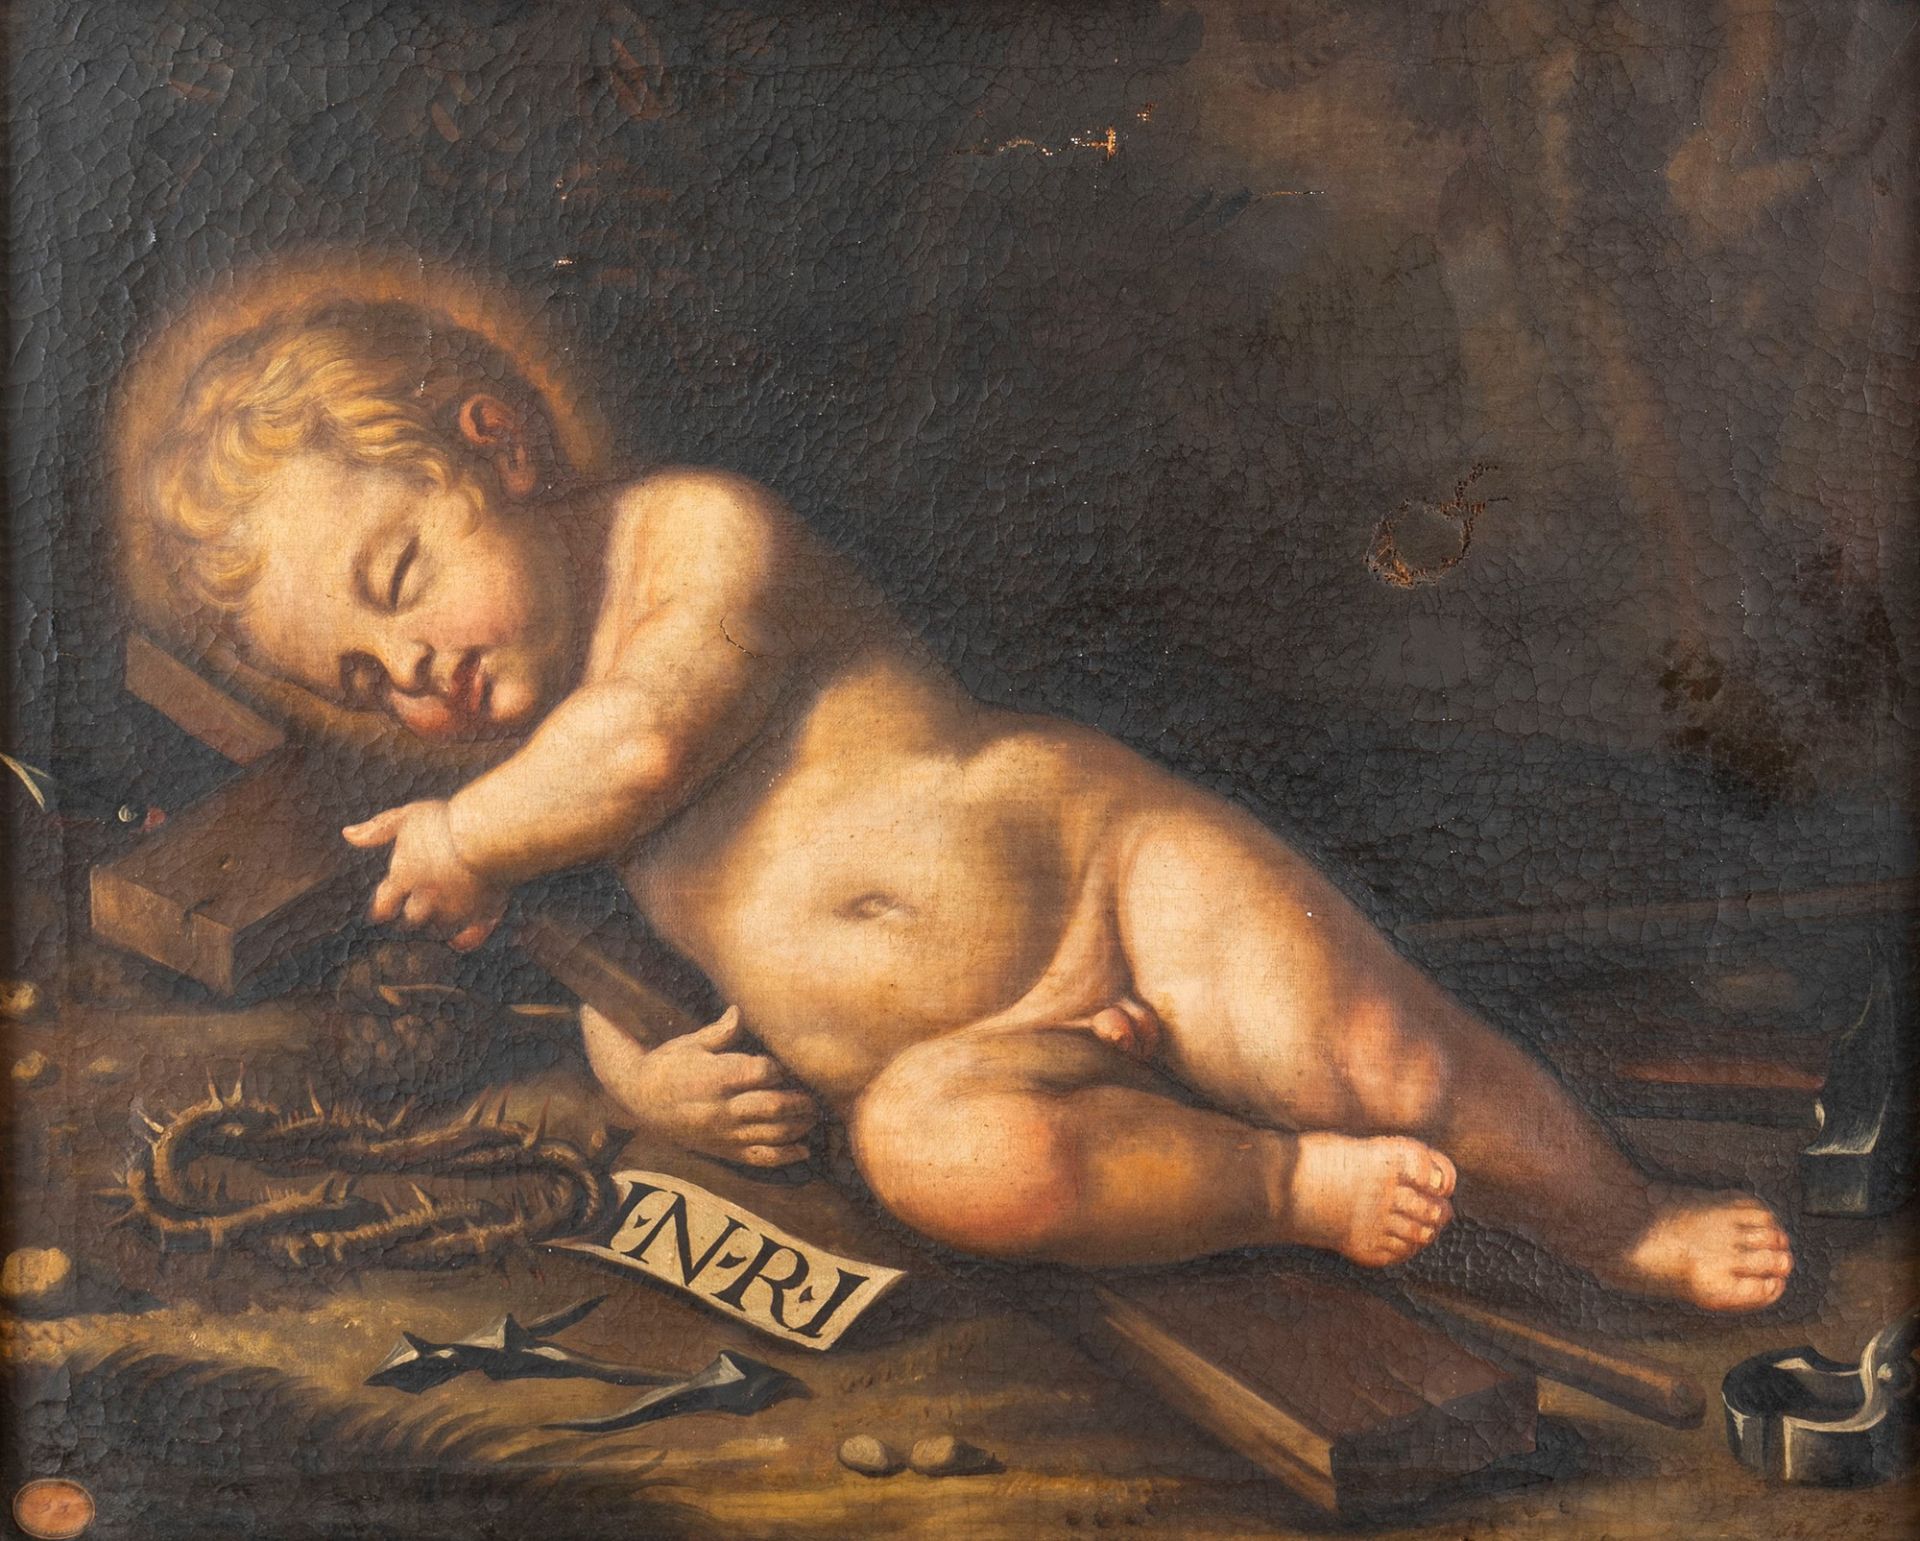 Emilian School, XVII century - Sleeping Infant Jesus with symbols of the Passion